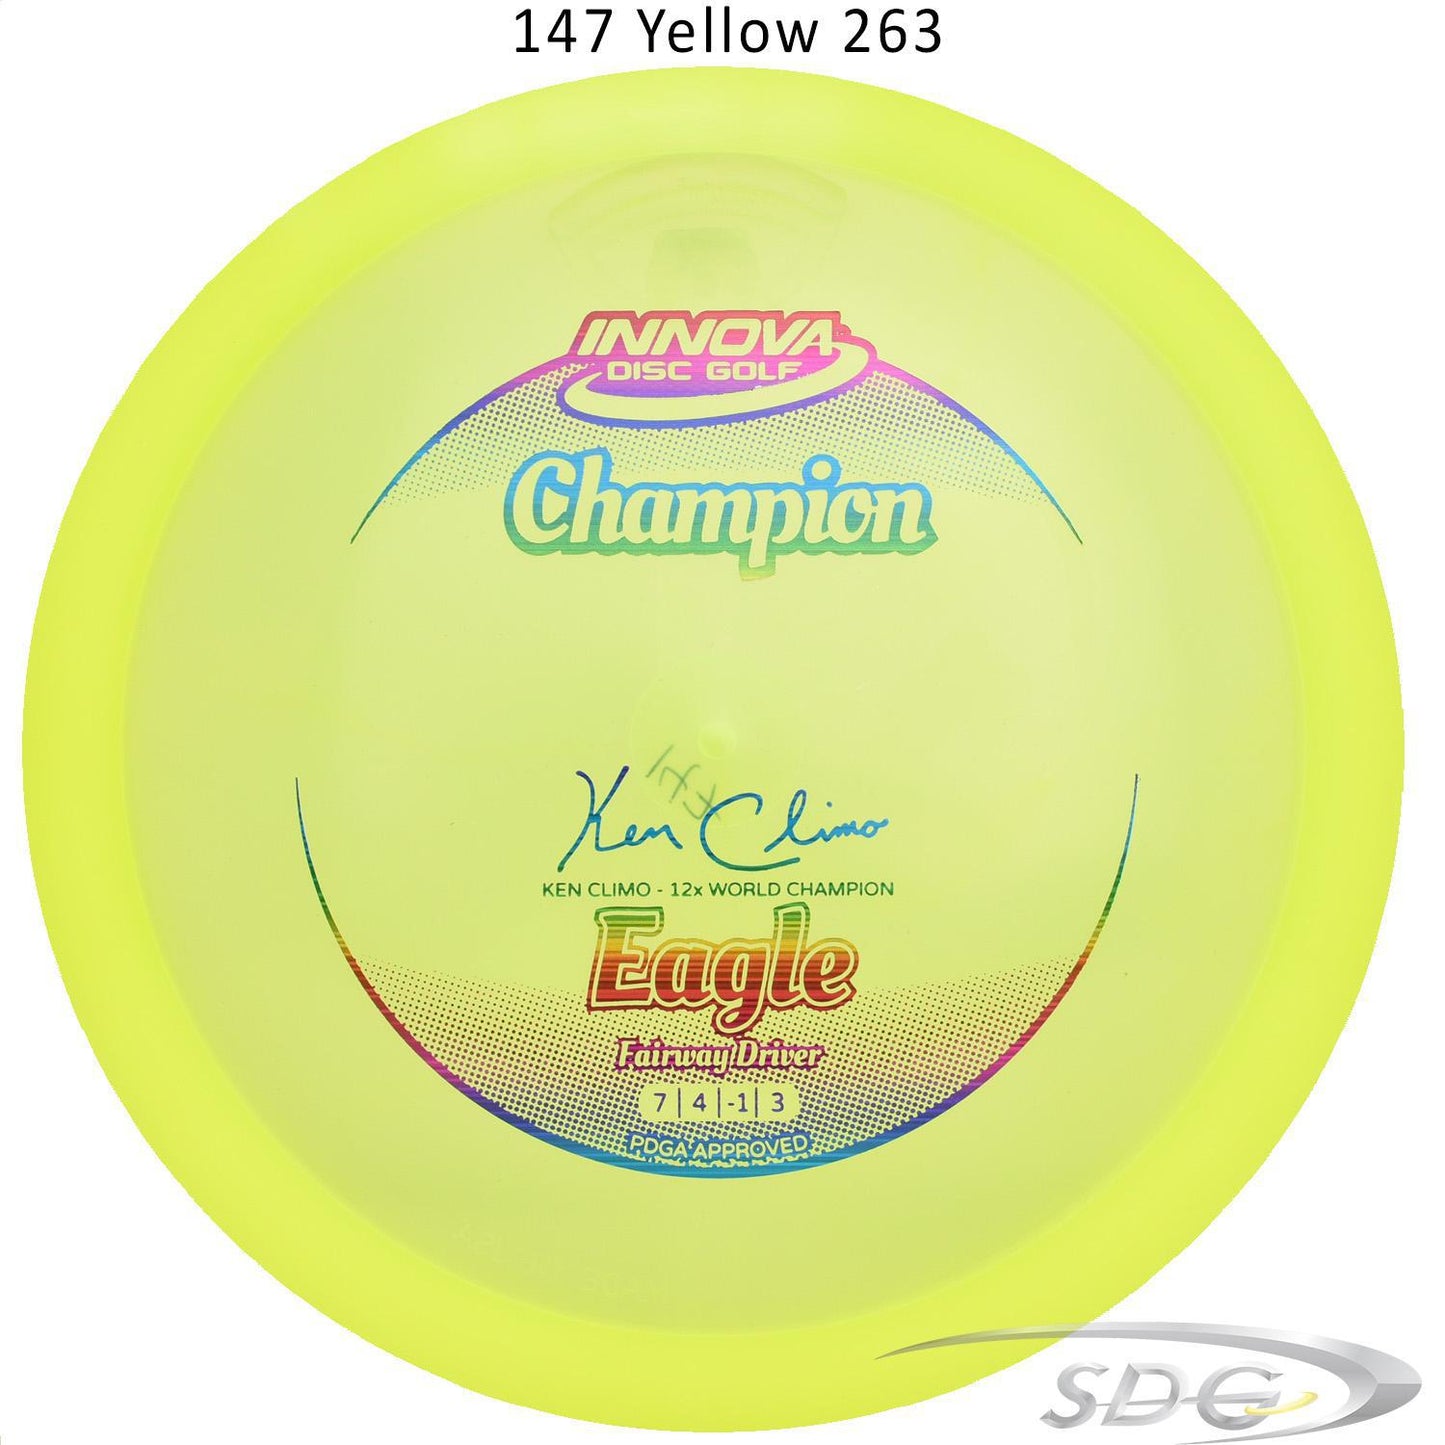 innova-champion-eagle-disc-golf-fairway-driver 147 Yellow 263 